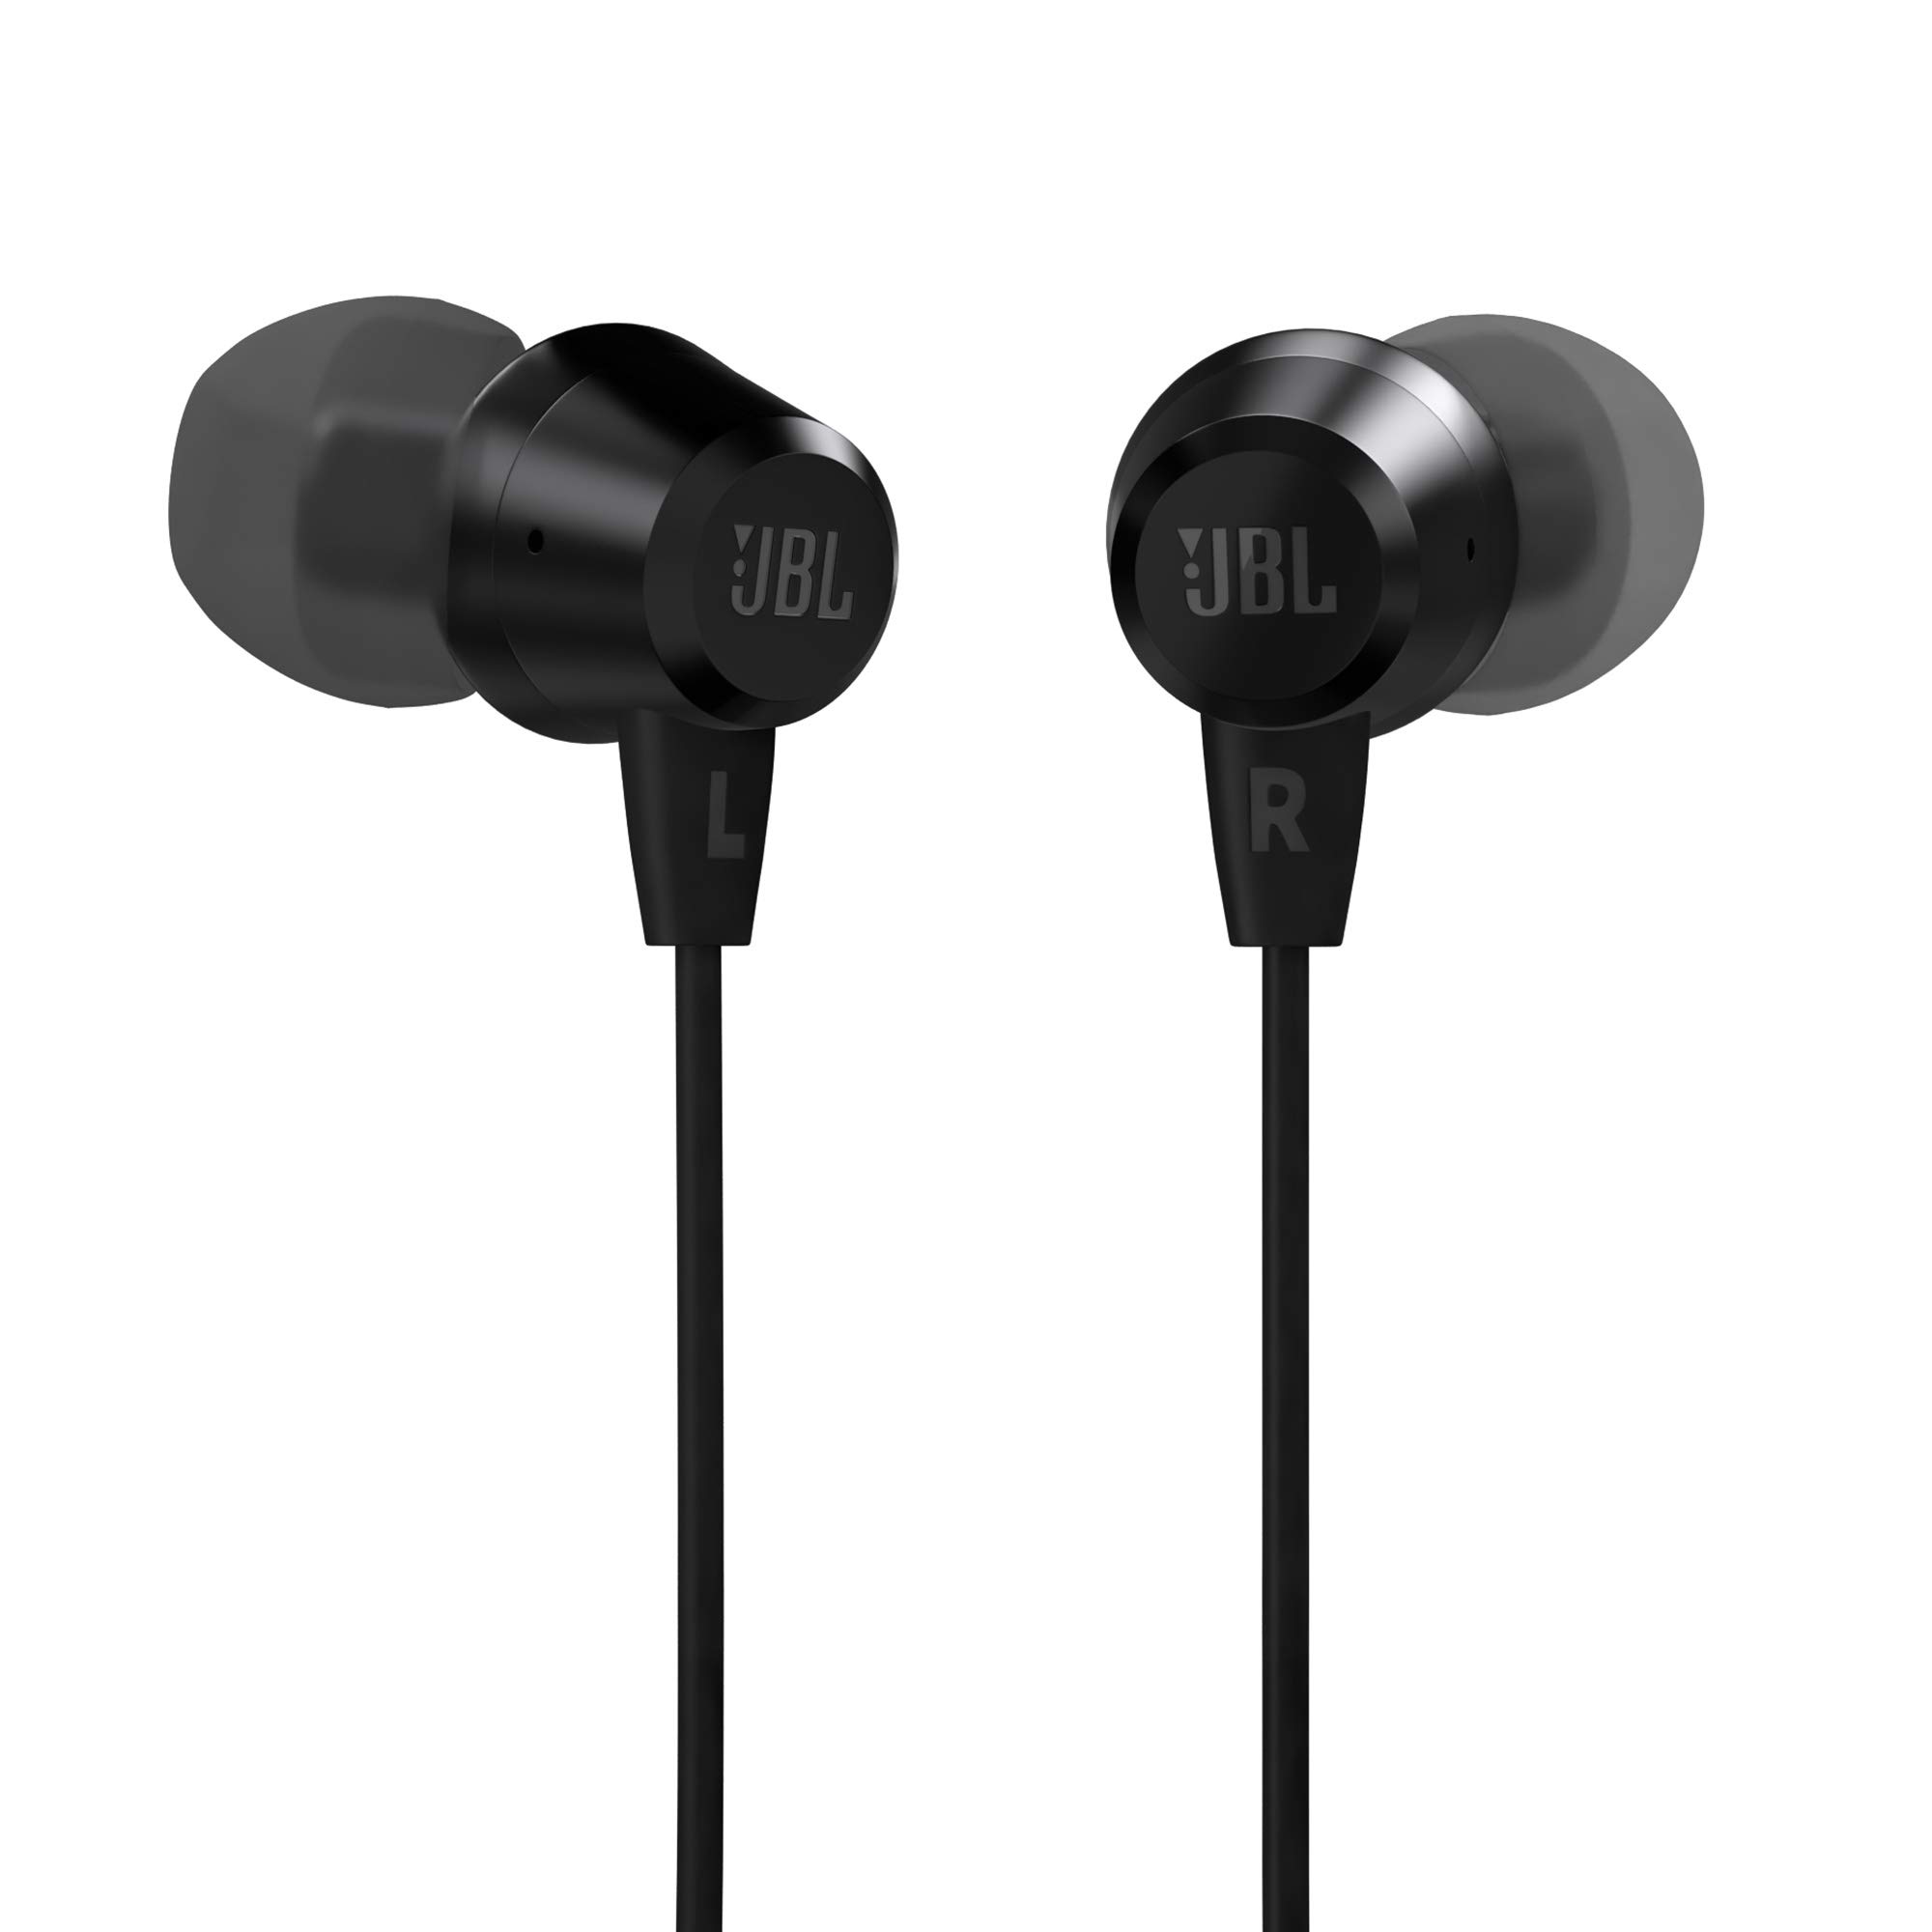 Black JBL C50HI earbuds